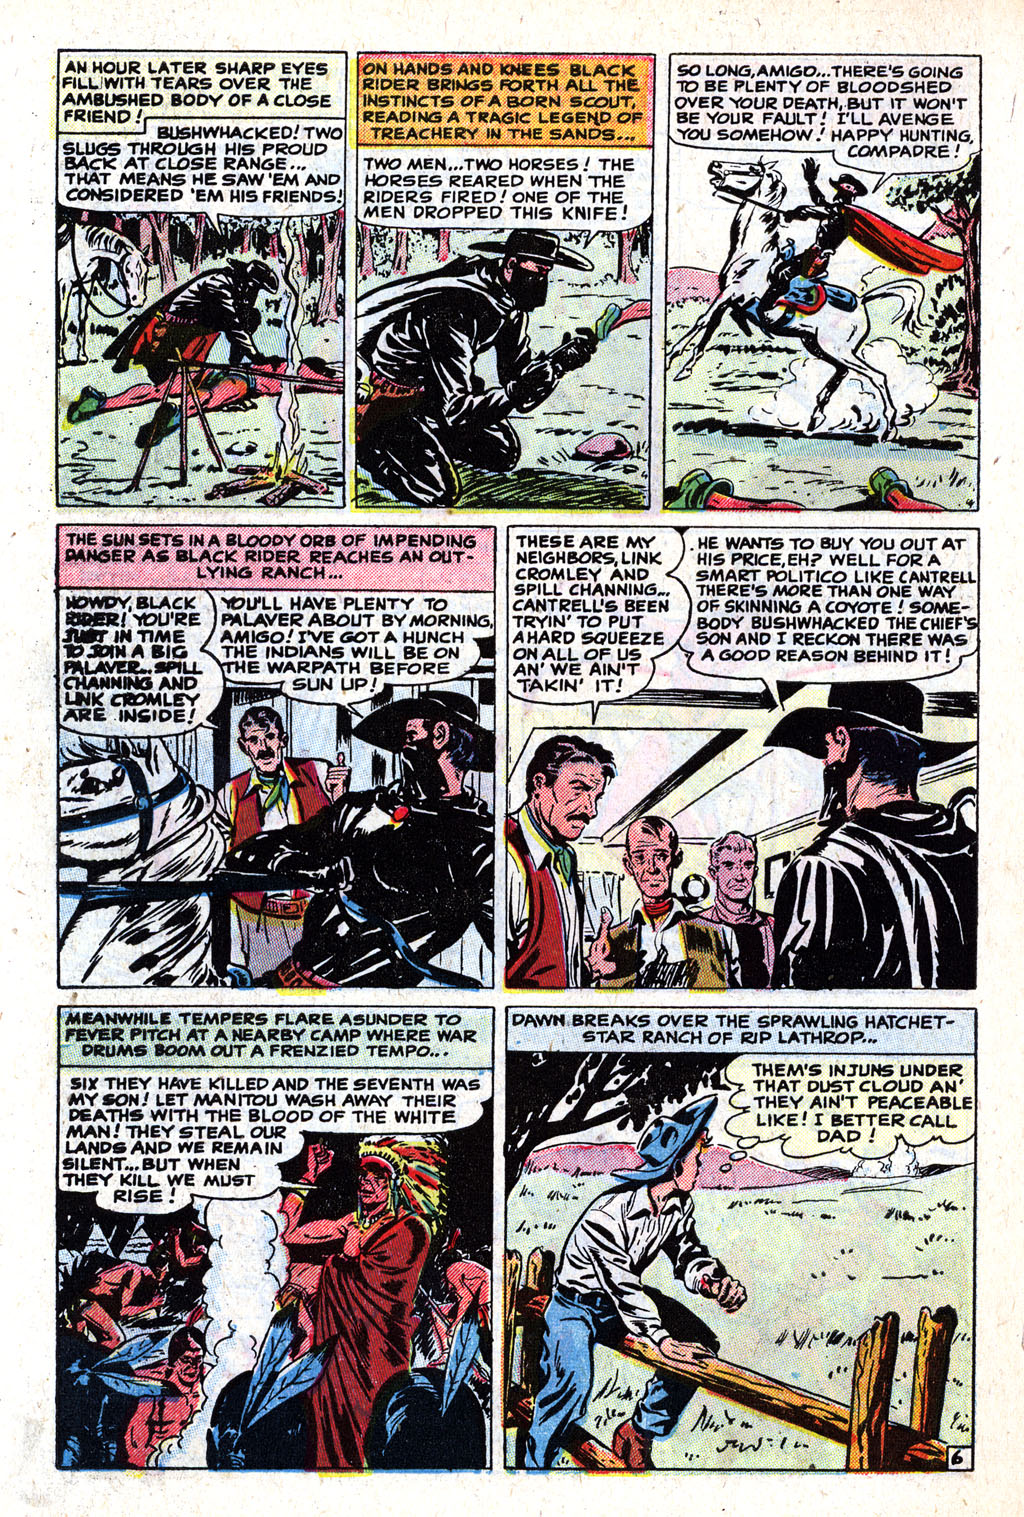 Black Rider 9 Page 7